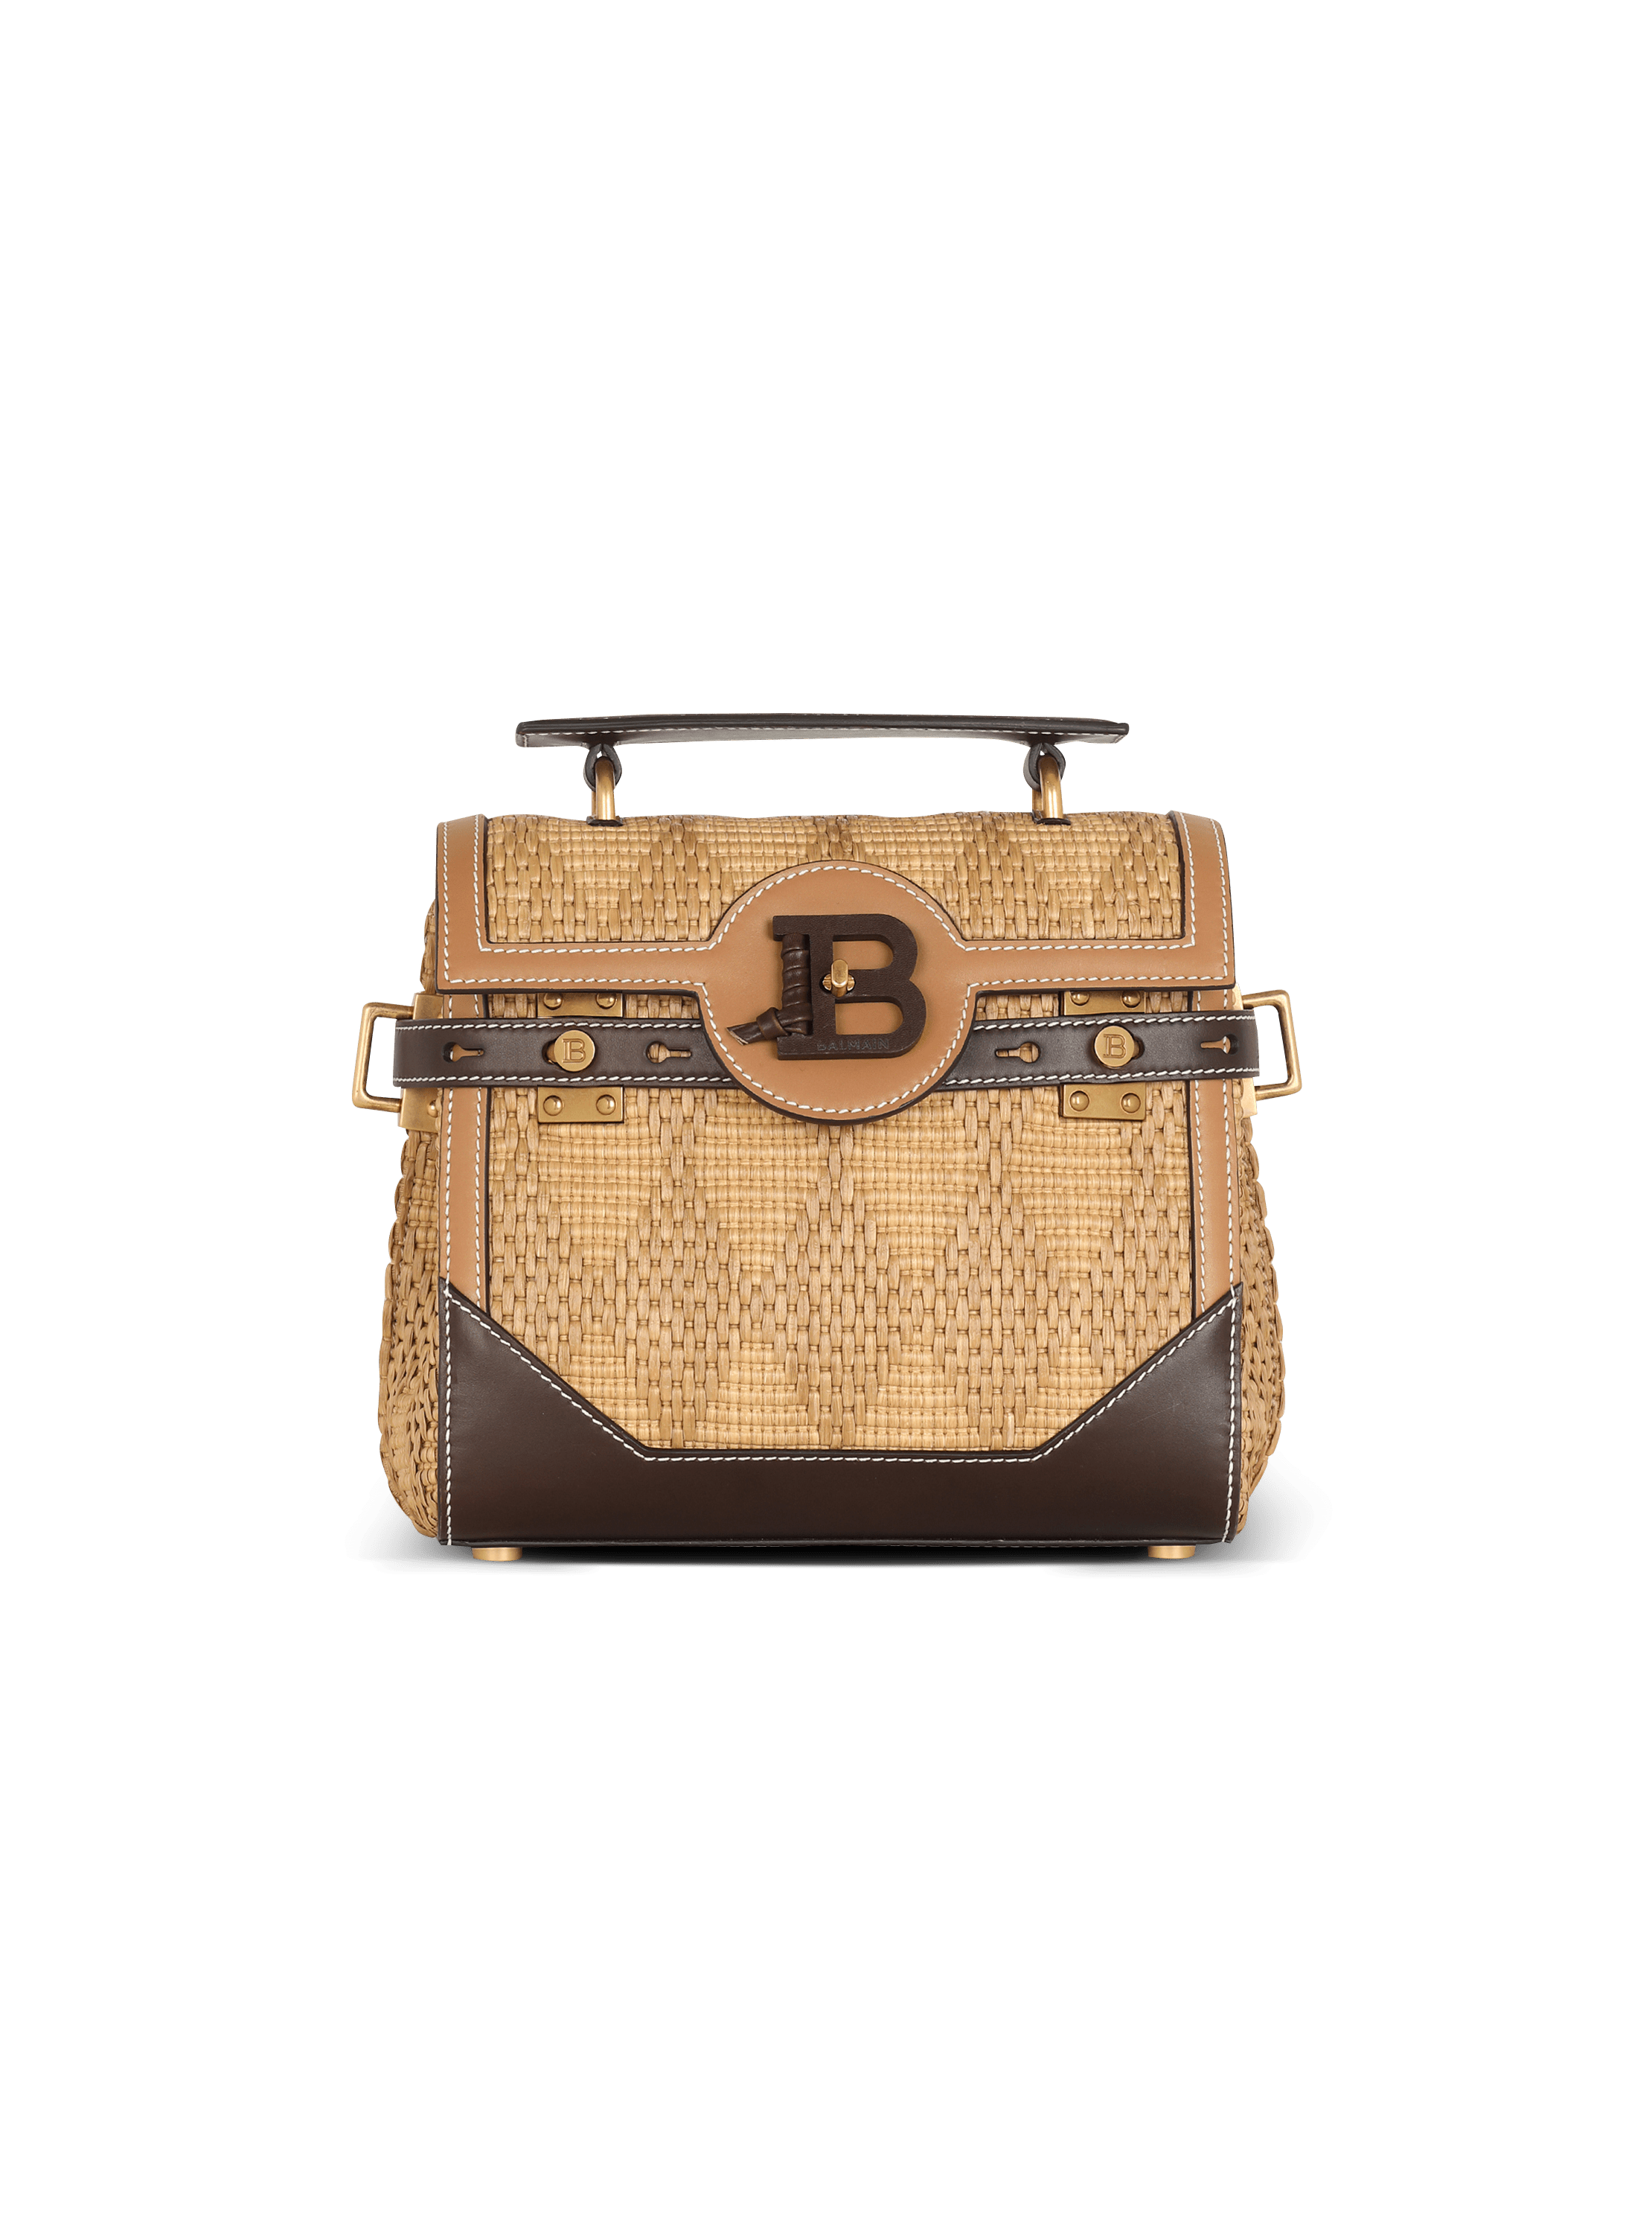 B-Buzz 23 leather and raffia bag